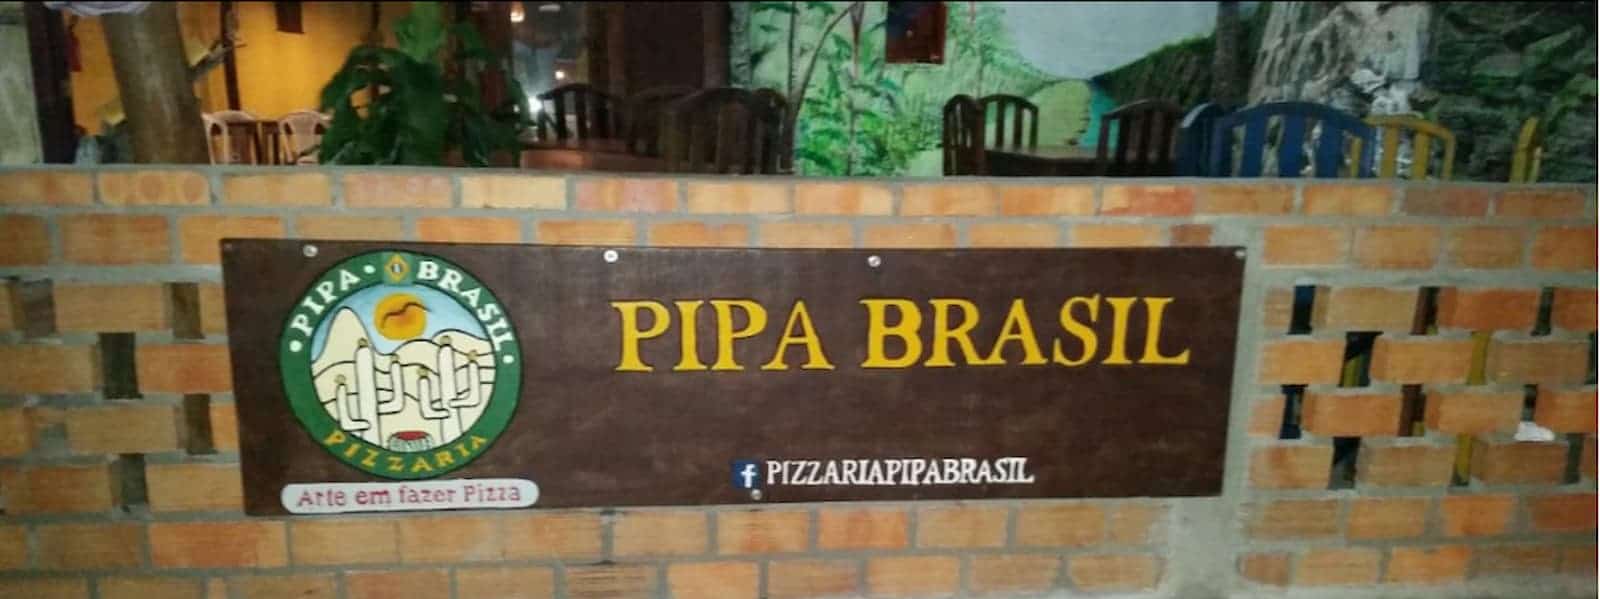 Pipa Brasil